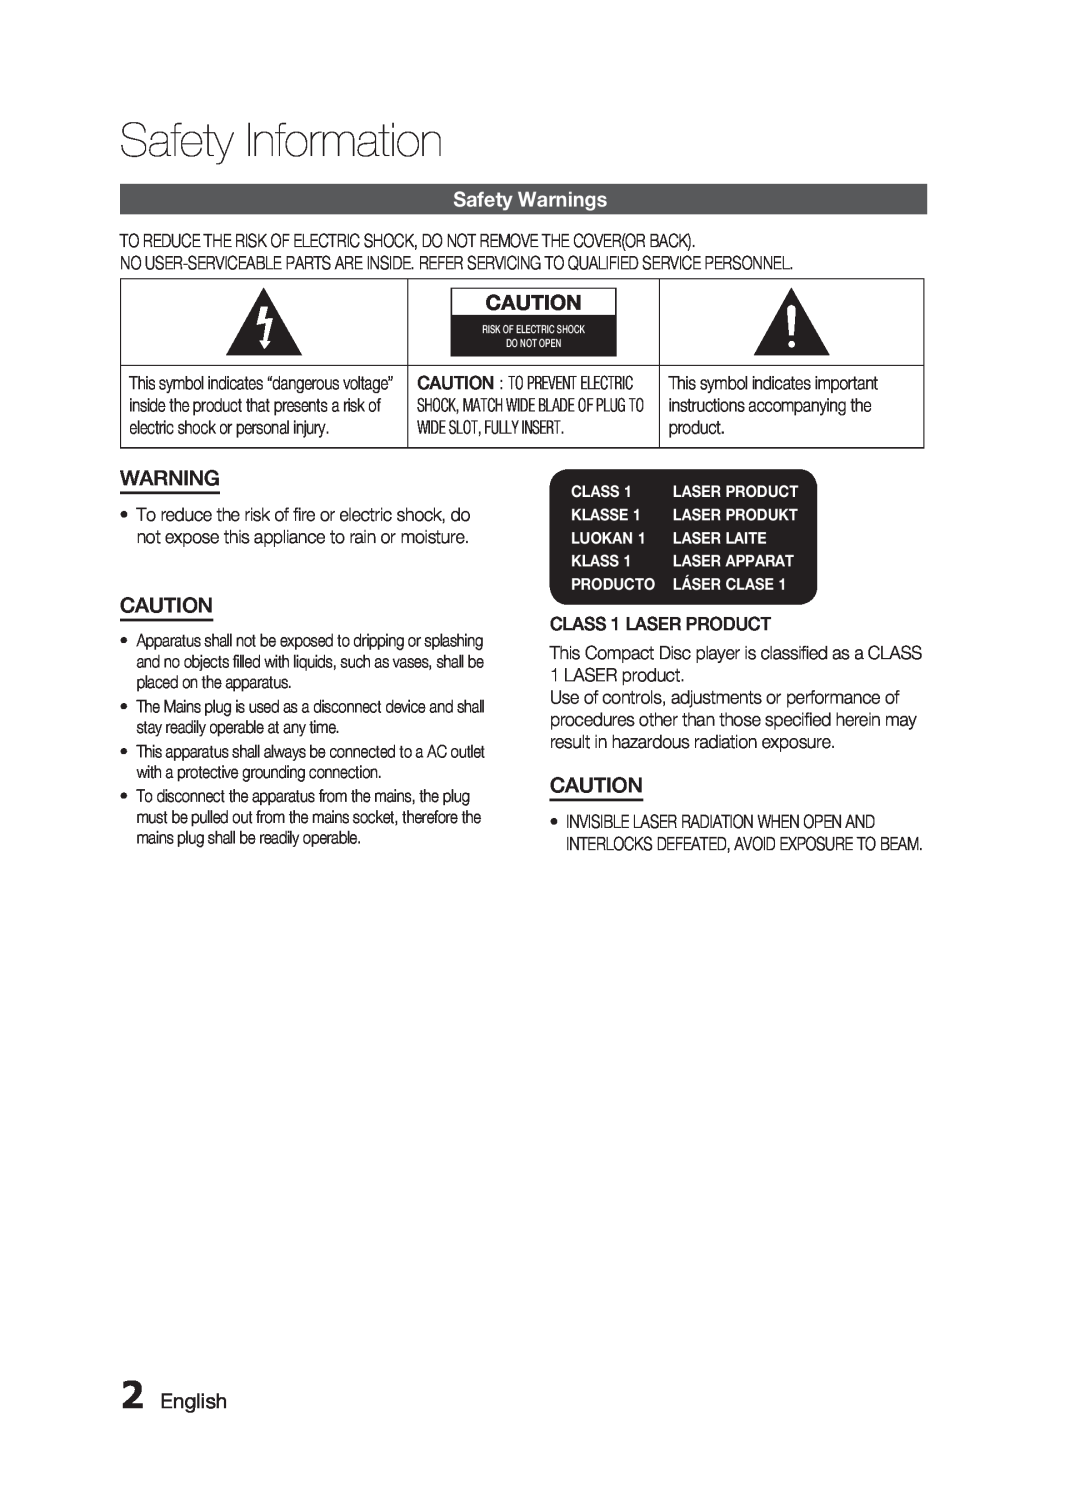 Samsung HT-C445N/MEA Safety Information, Safety Warnings,  English, Class, Klasse, Luokan, Laser Laite, Laser Apparat 